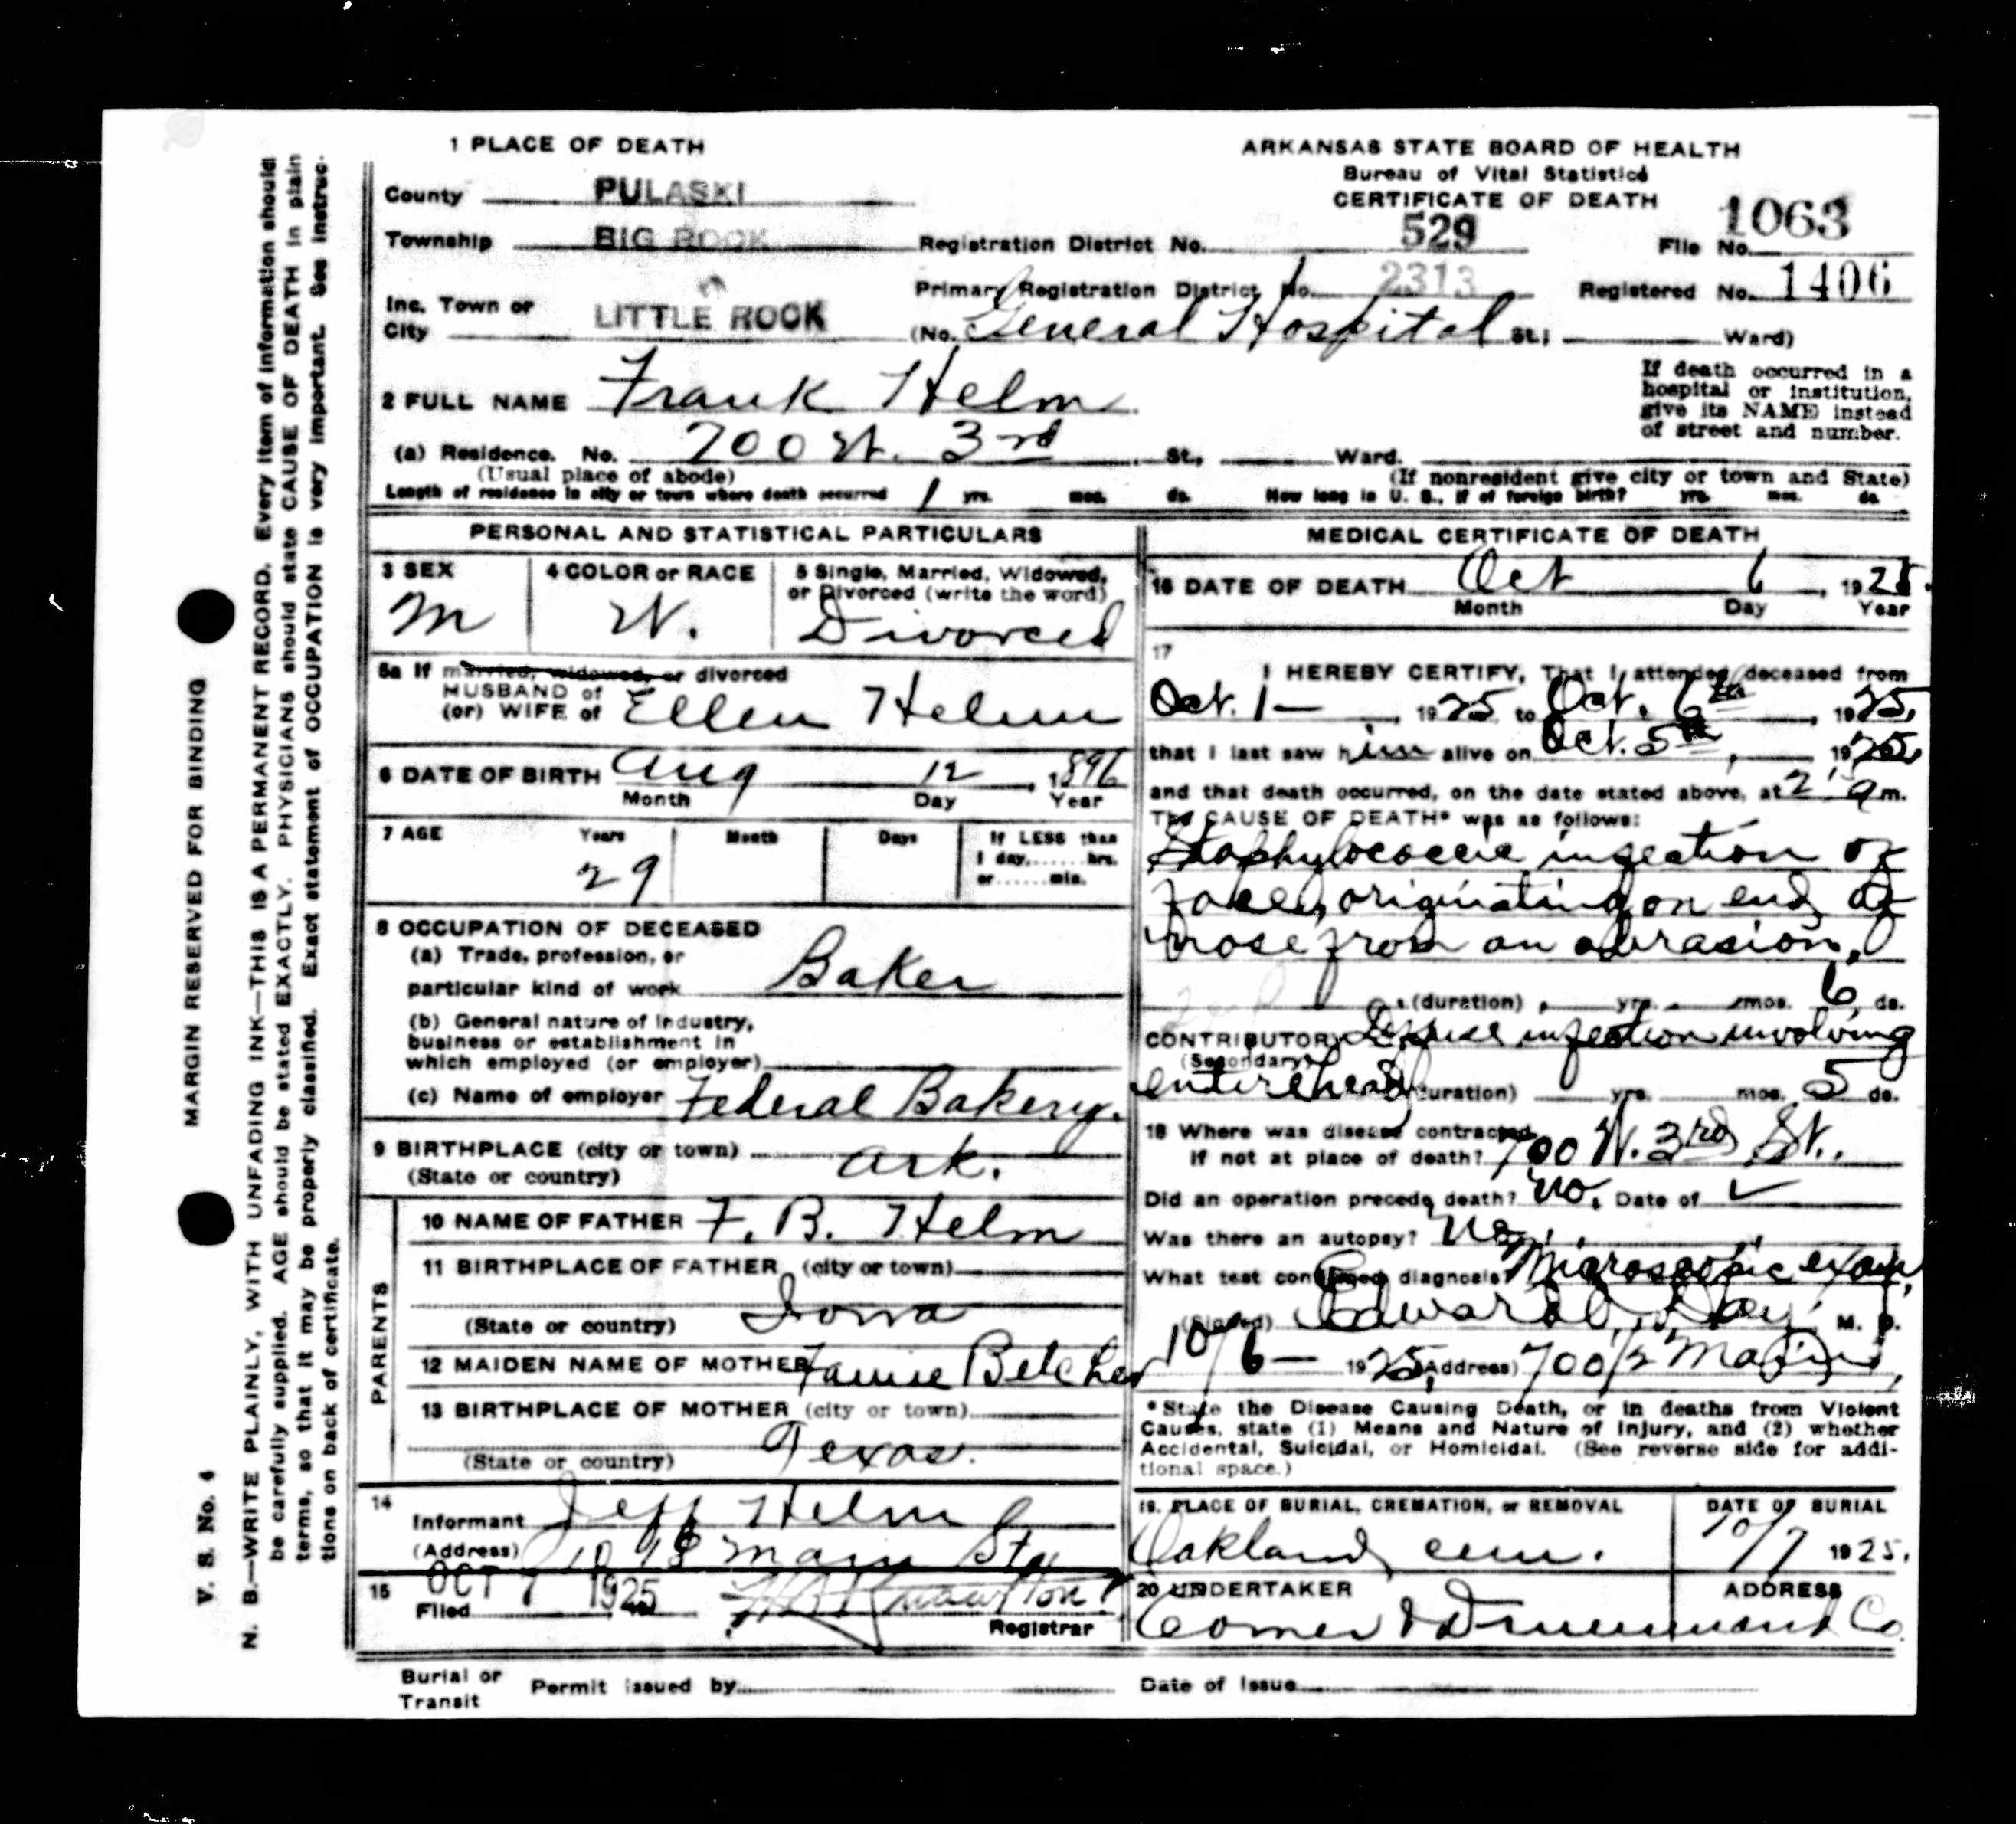 Death certificate of Frank Helm